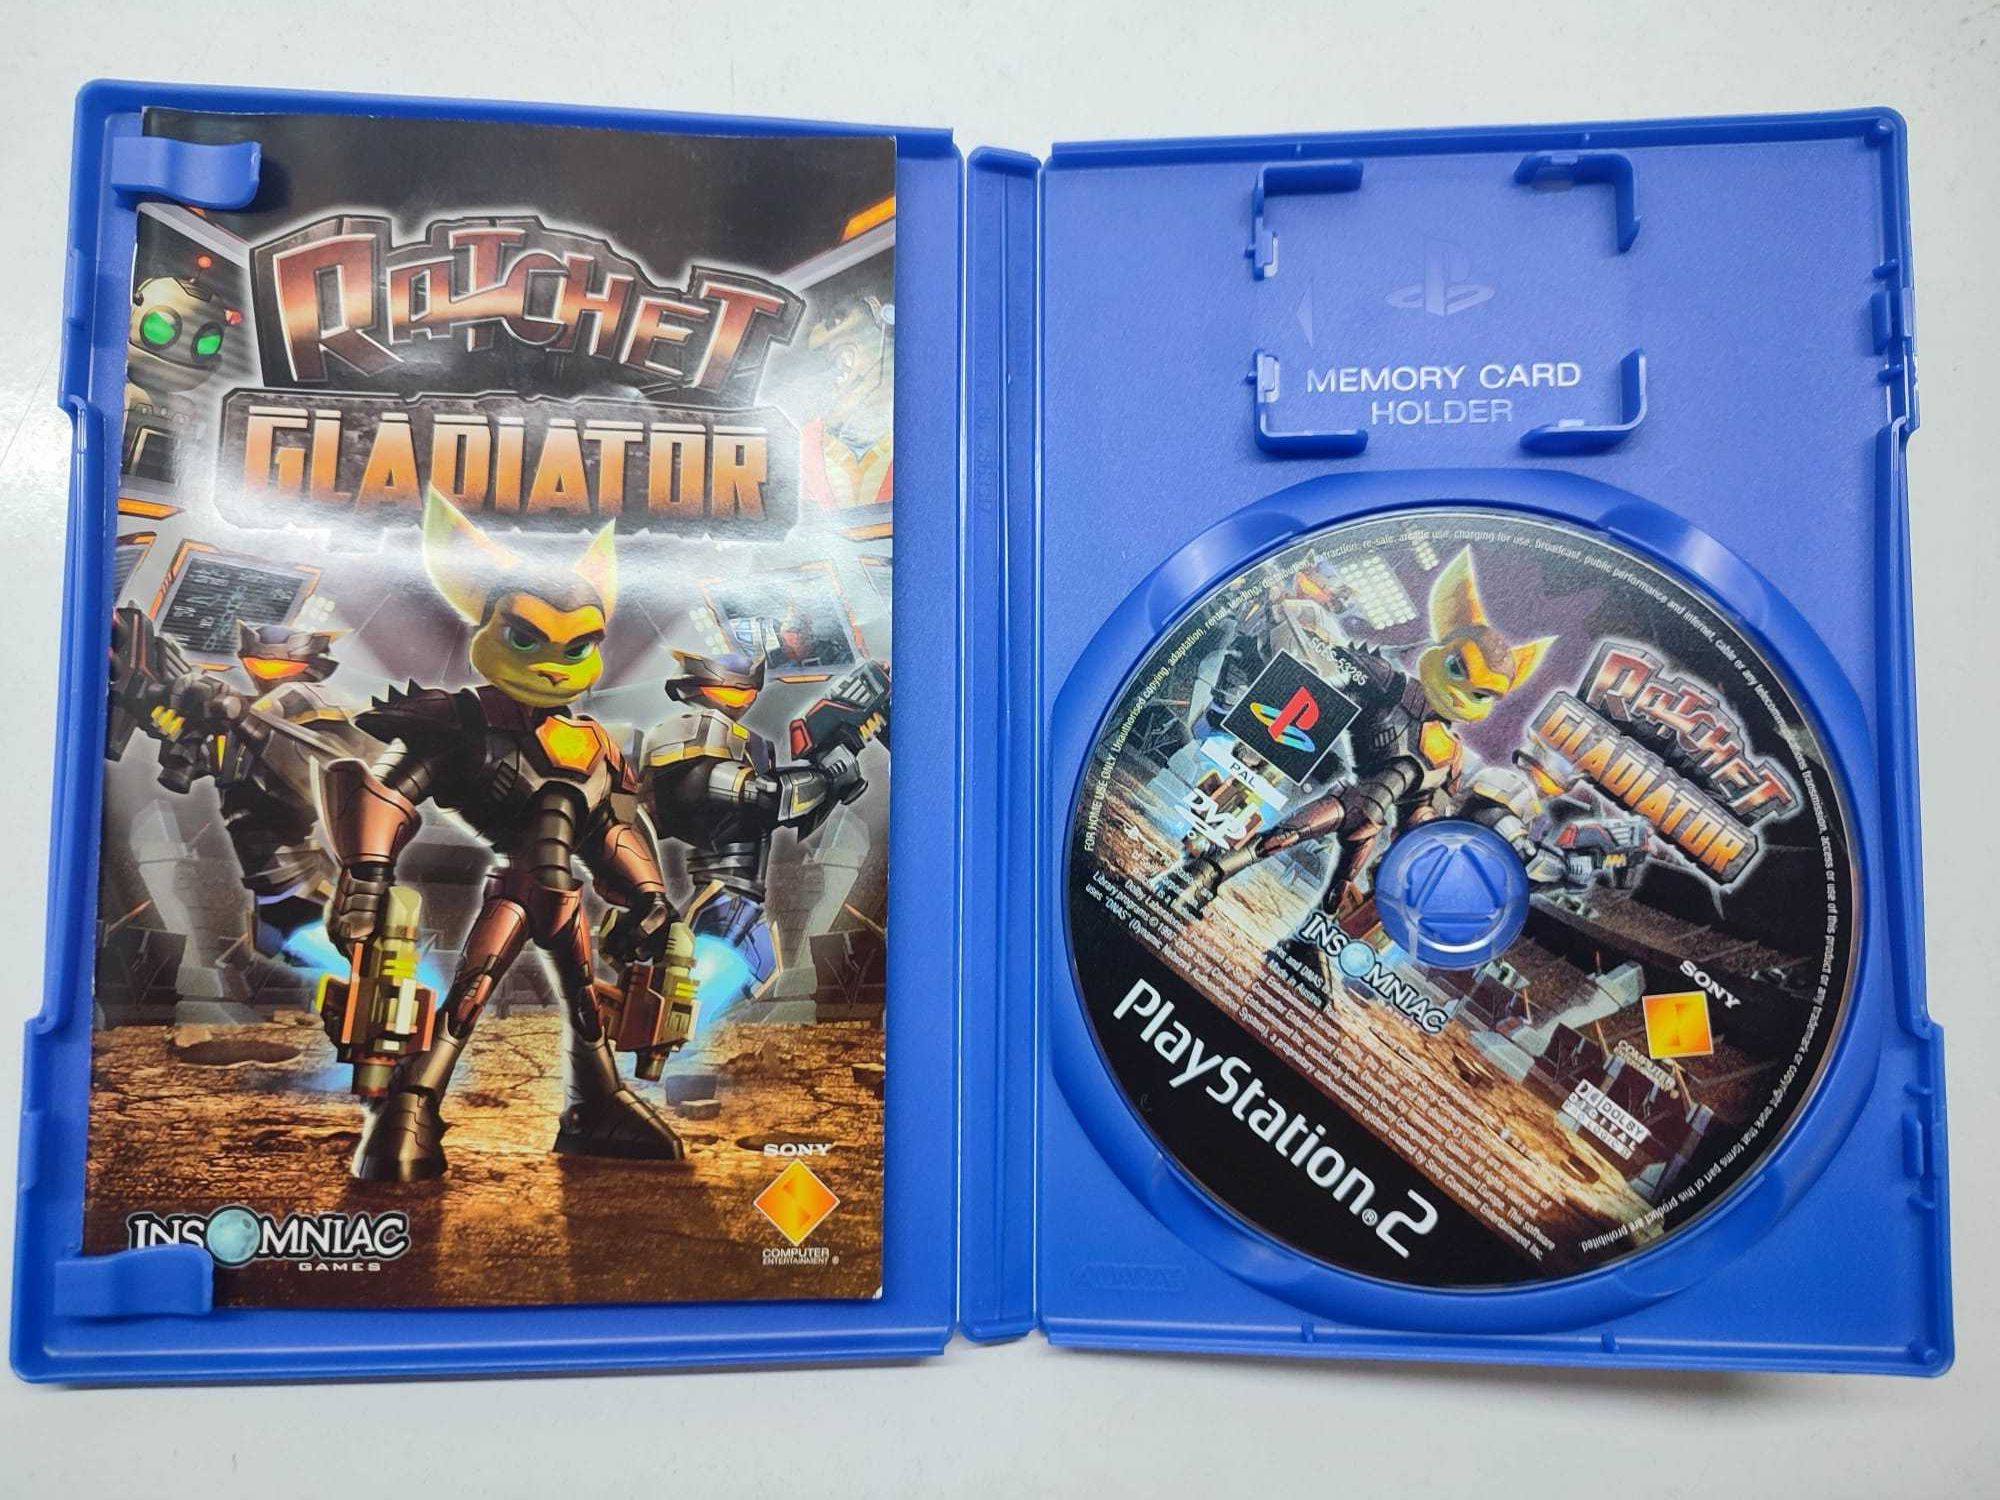 PS2 - Ratchet: Gladiator